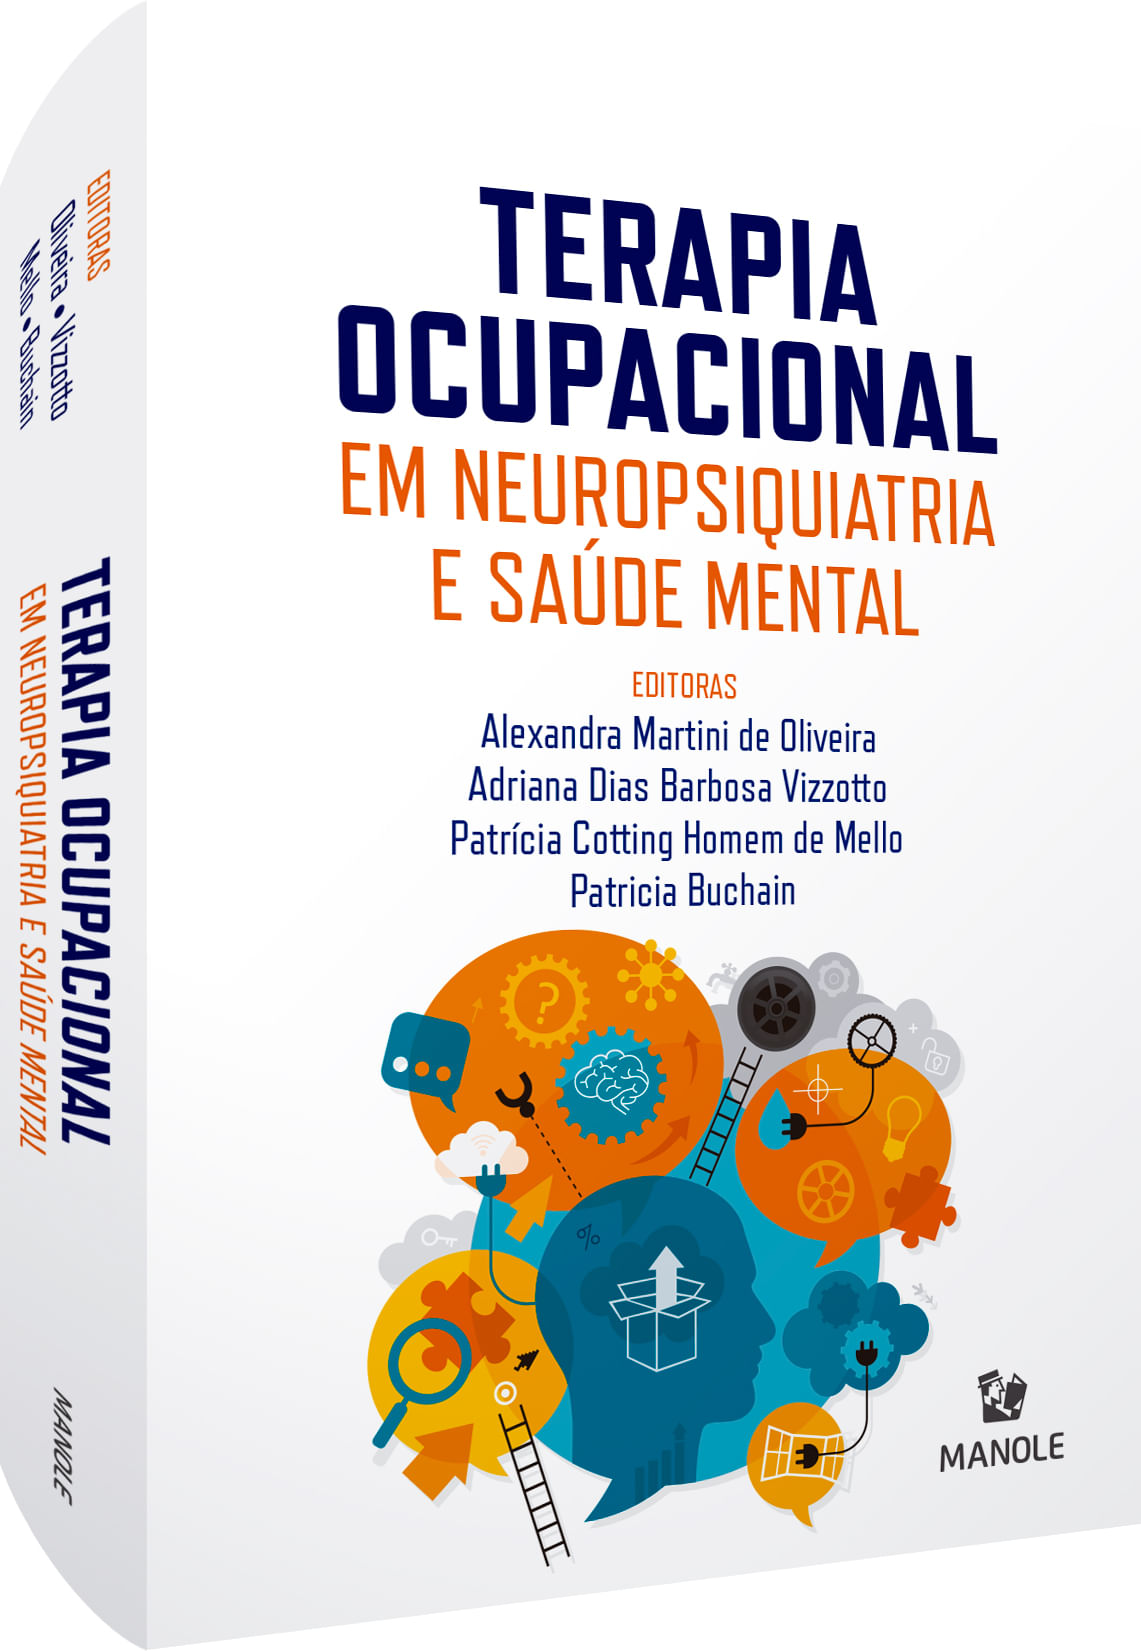 Terapia-Ocupacional-em-Neuropsiquiatria-e-Saude-Mental-FINAL